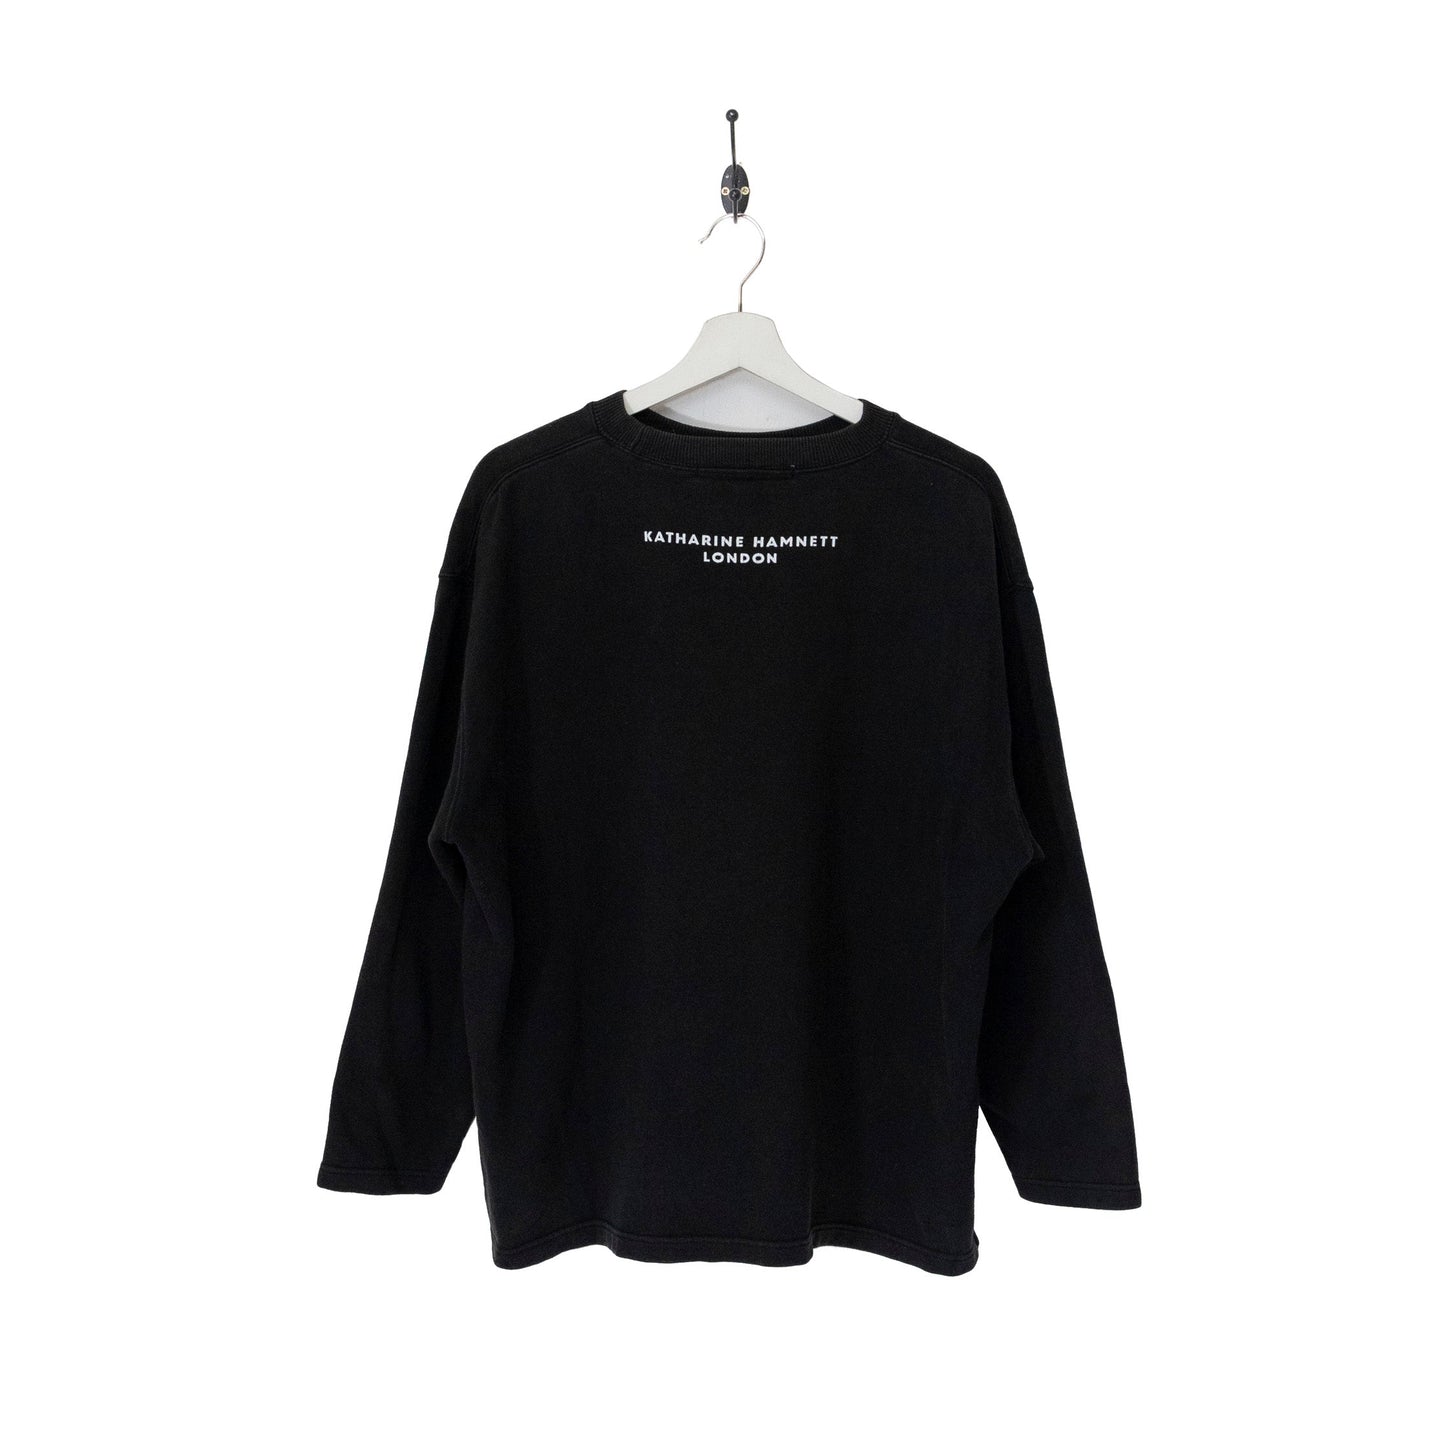 Katherine Hamnett London Black Sweatshirt